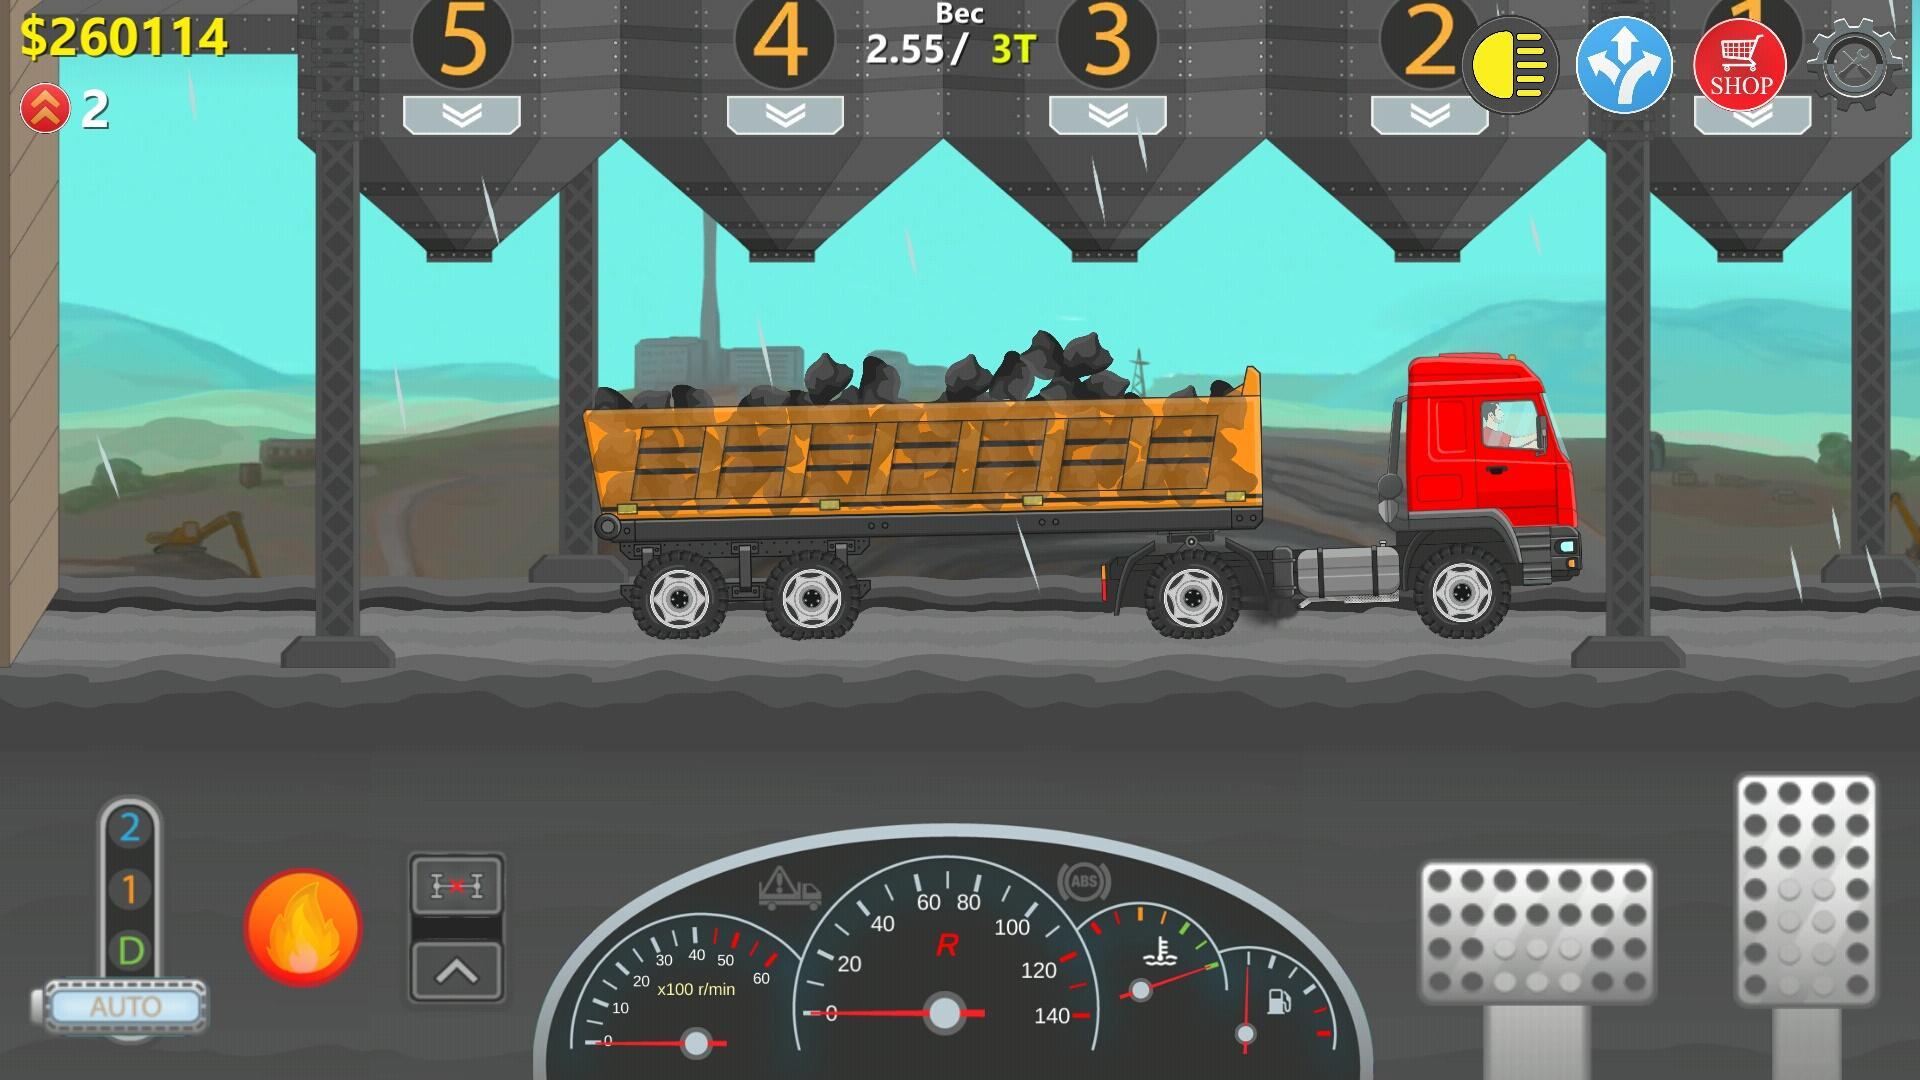 Взломки симуляторы мод много голды. Trucker real Wheels - Simulator. Дальнобойщики 2 d. Дальнобойщики 2d грузовик симулятор мод. Игры 2 d про дальнобойщиков на андроид.